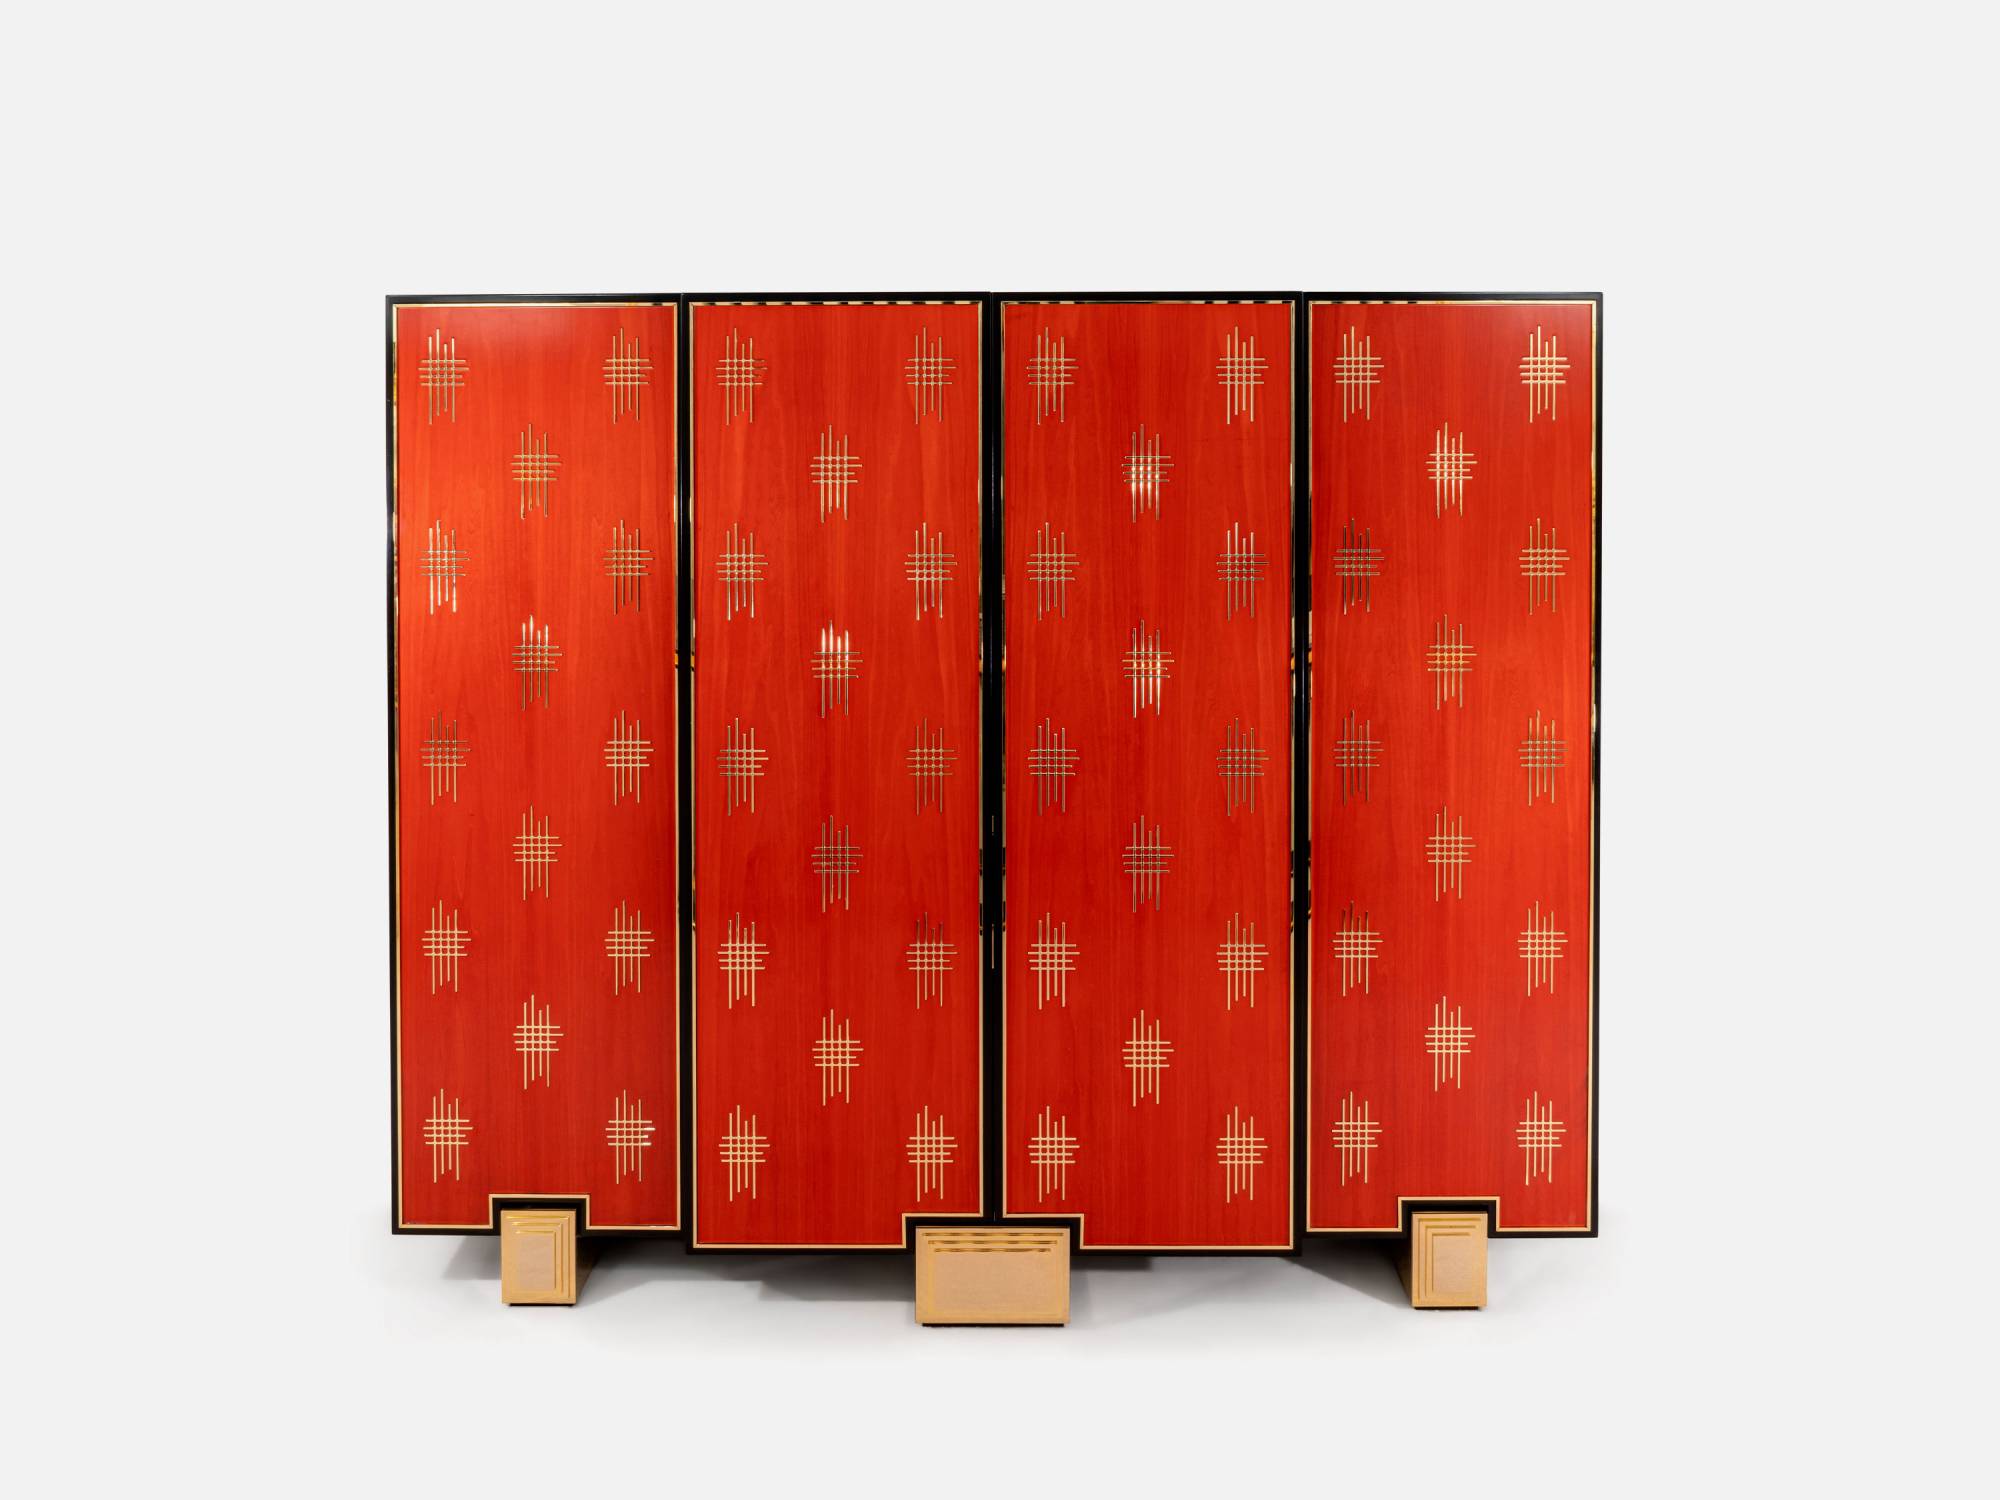 ART. 2324 – C.G. Capelletti Italian Luxury Classic Bar furniture. Made in Italy classic interior design